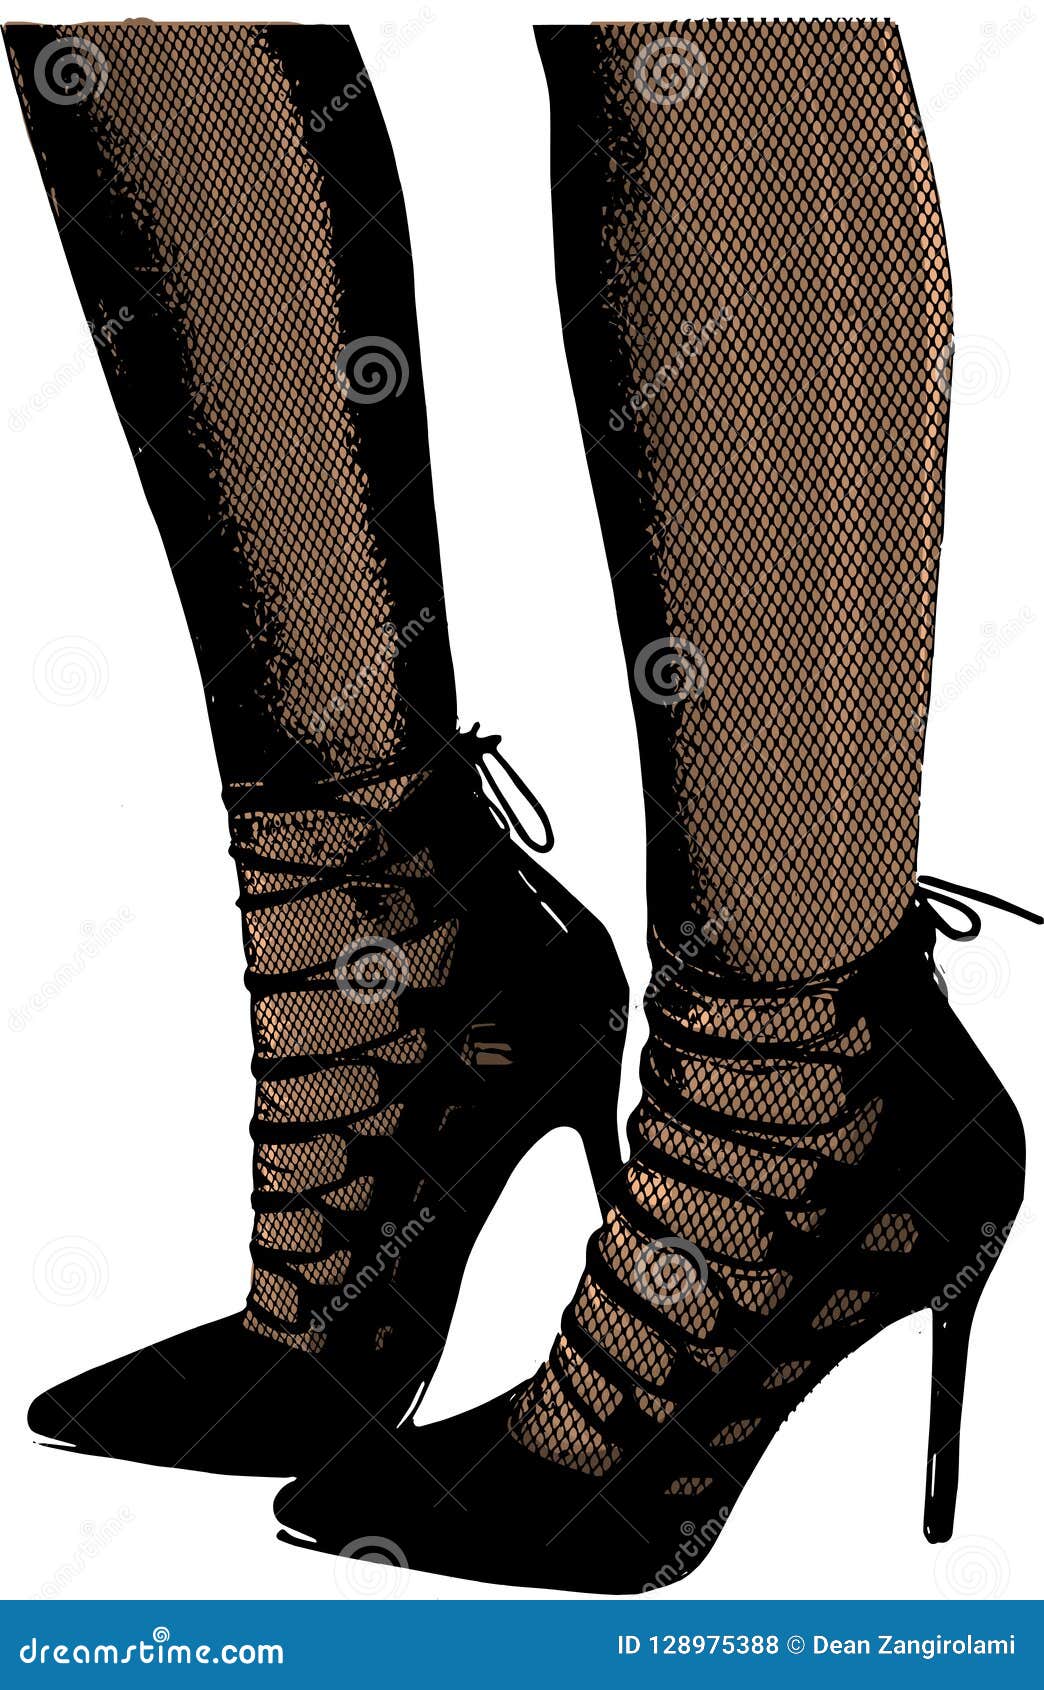 girls stylish heels